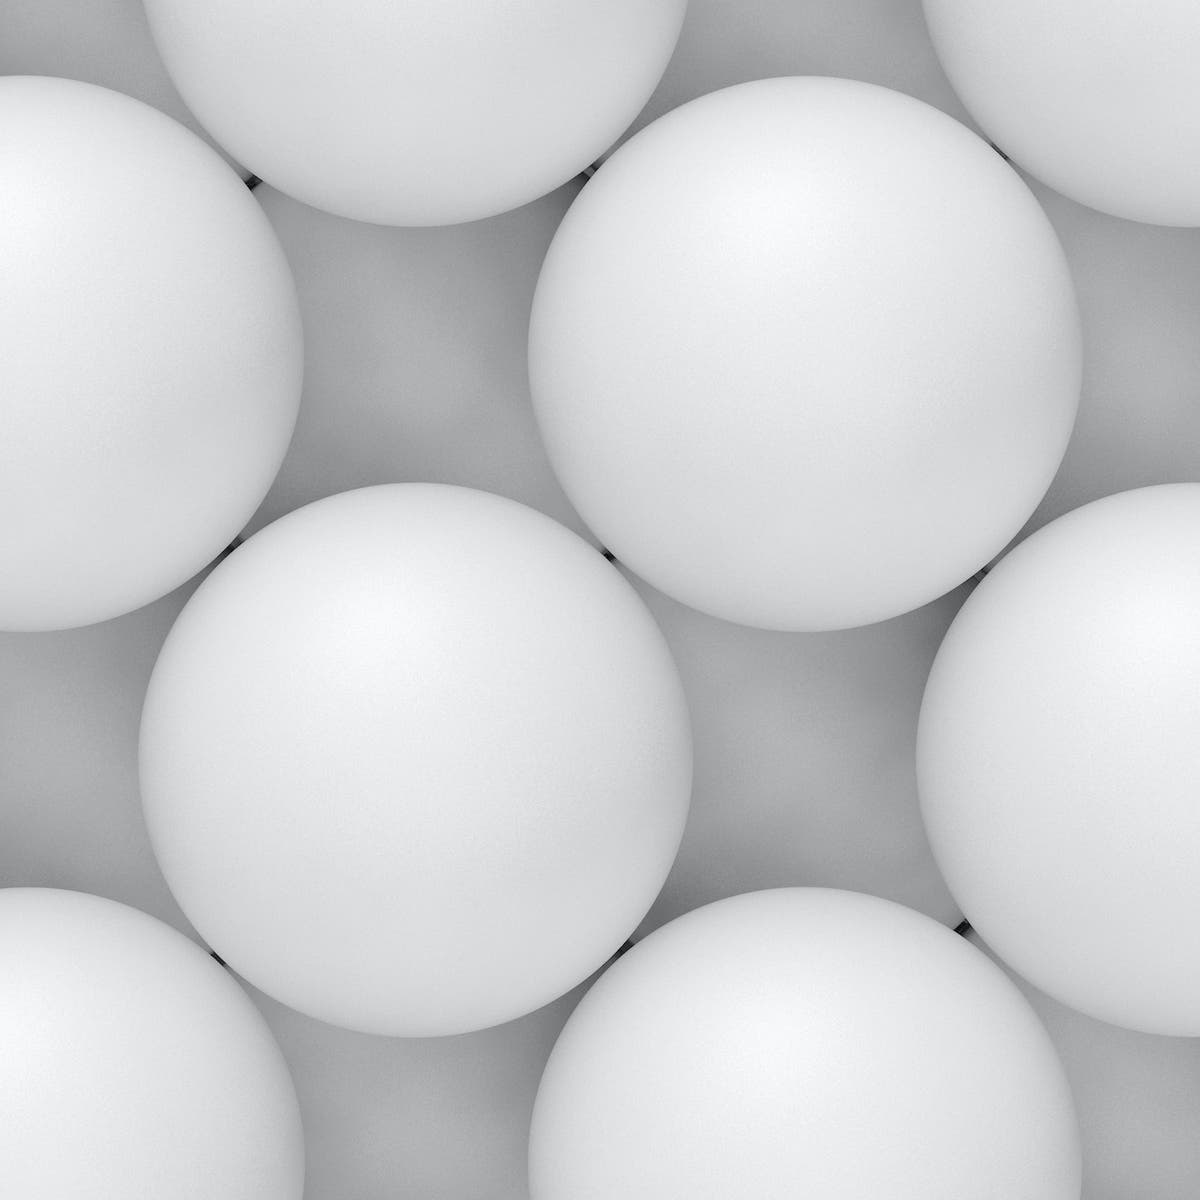 White balls graphic